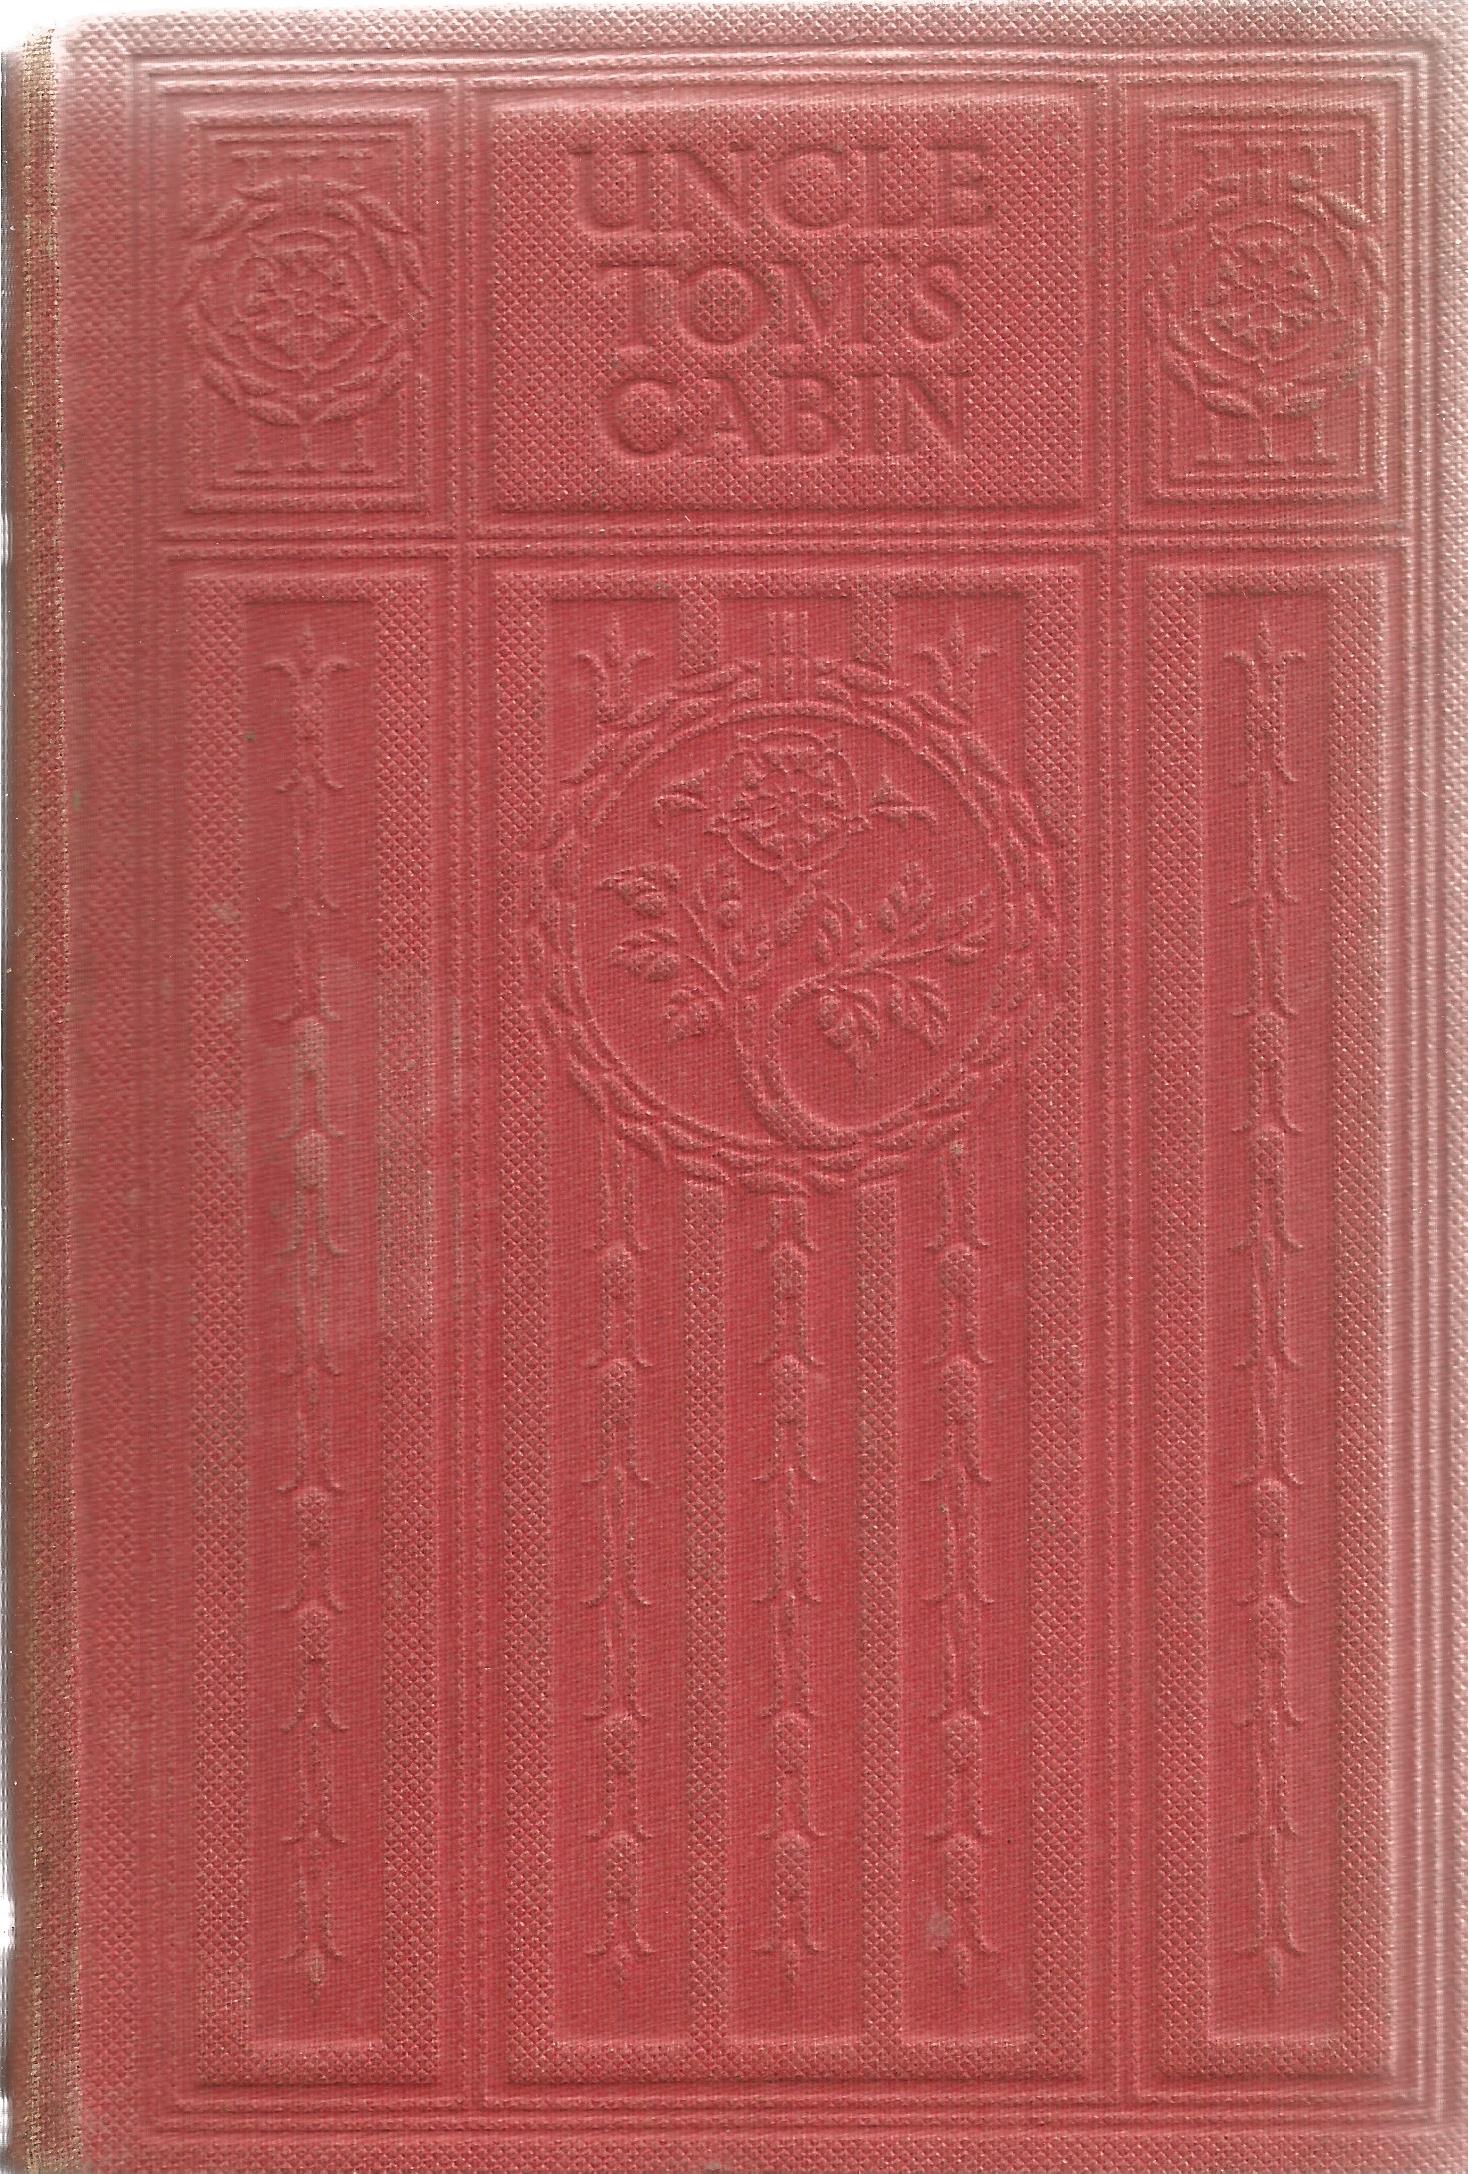 Harriet Beecher Stowe hardback book Uncle Tom's Cabin published by Blackie & Son Ltd in good